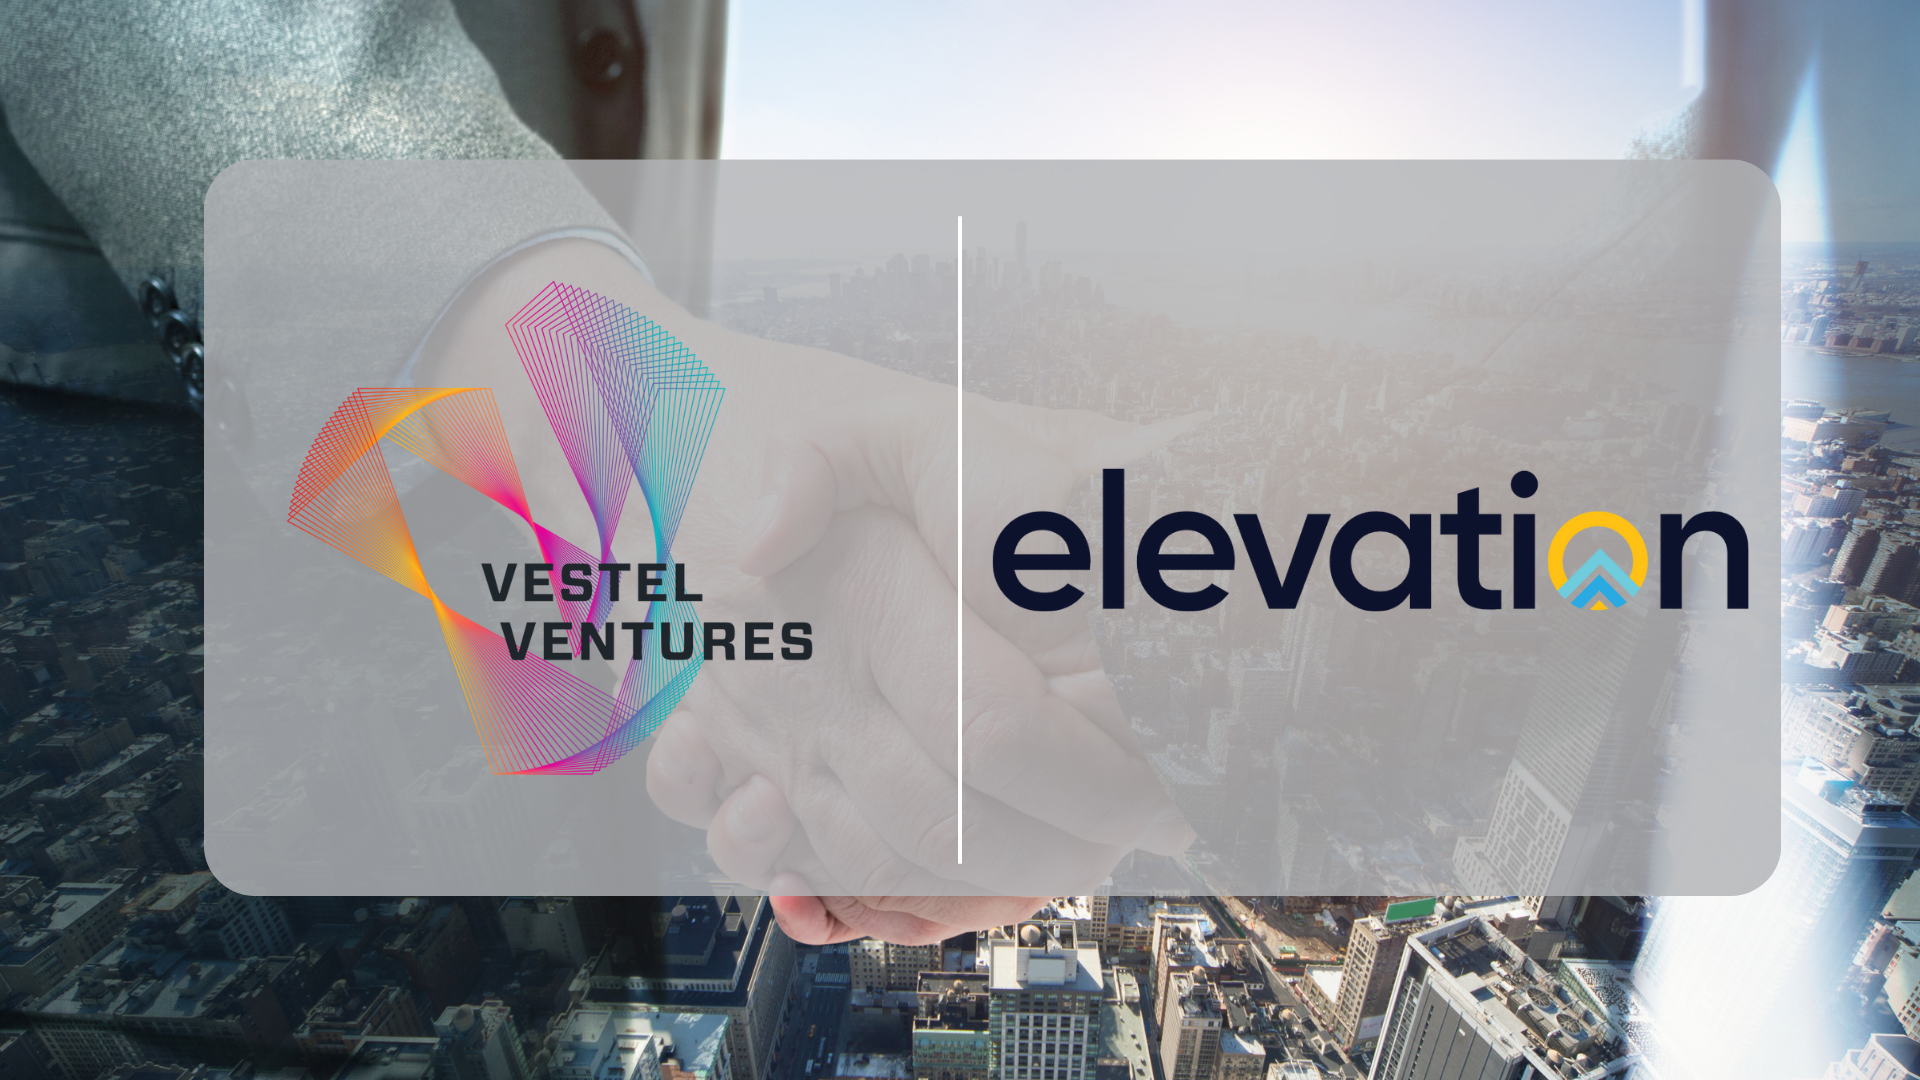 Vestel Ventures, Elevation Microsystems